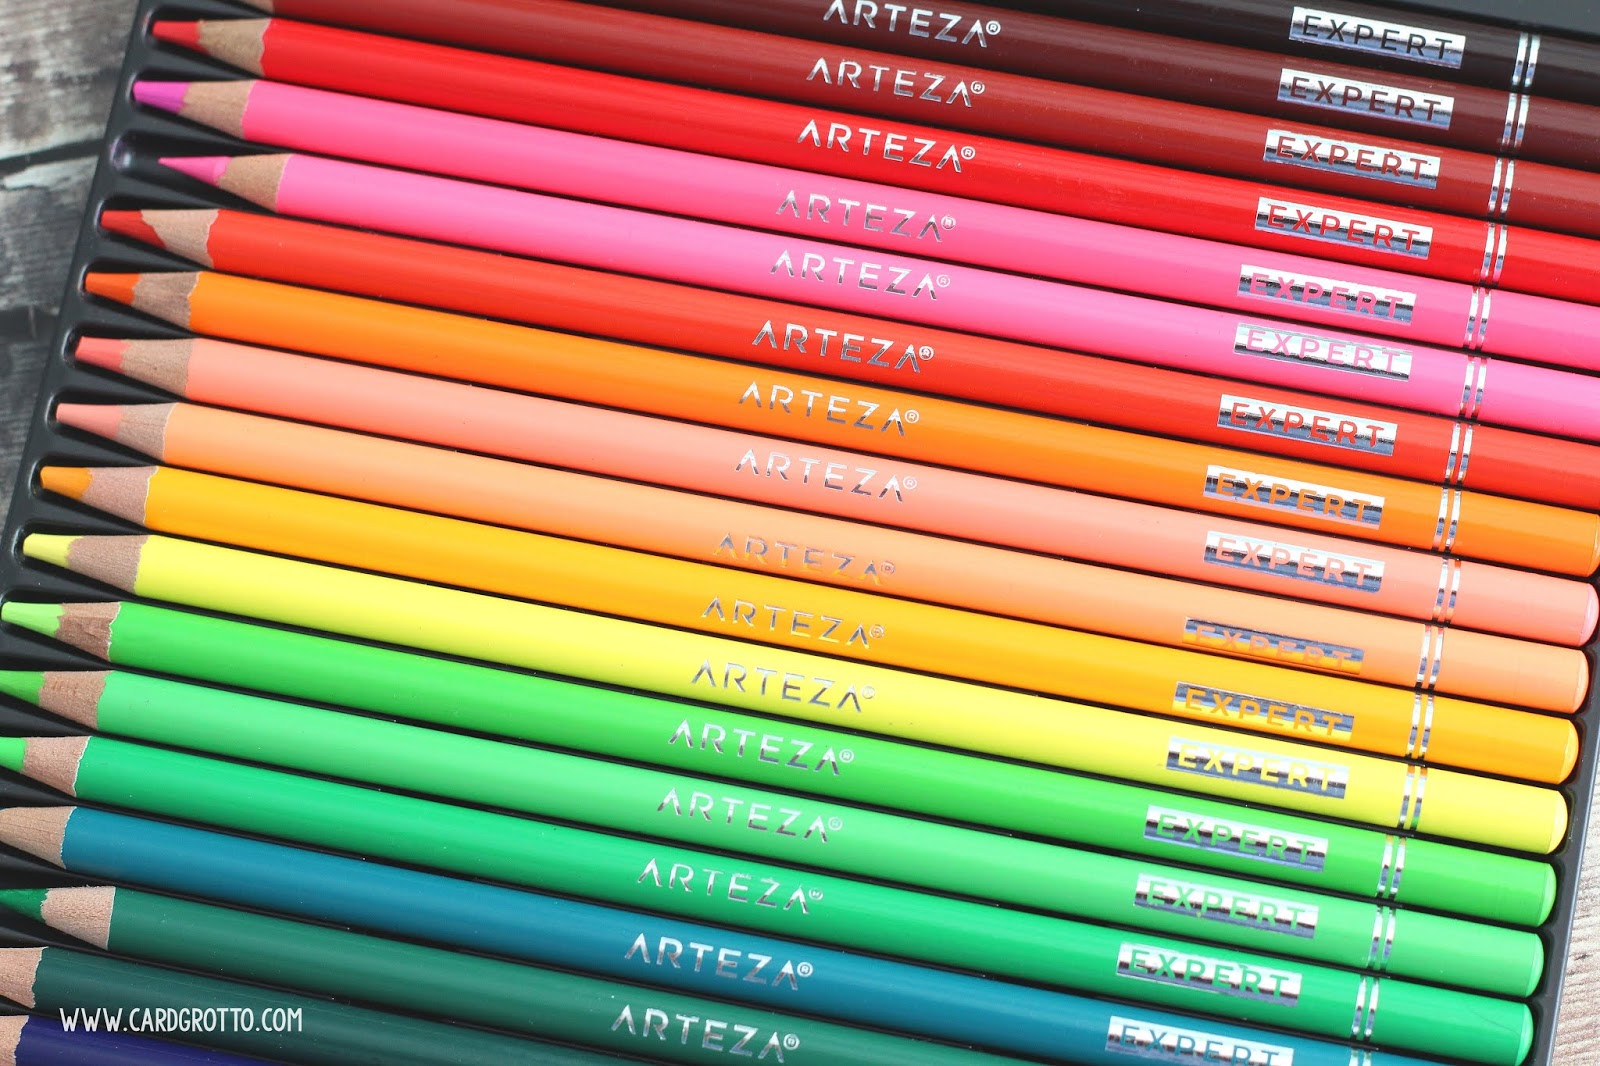 The Card Grotto Video Arteza Coloured Pencils Colouring Review Best review of all arteza watercolor pencils for professional use 2021. arteza coloured pencils colouring